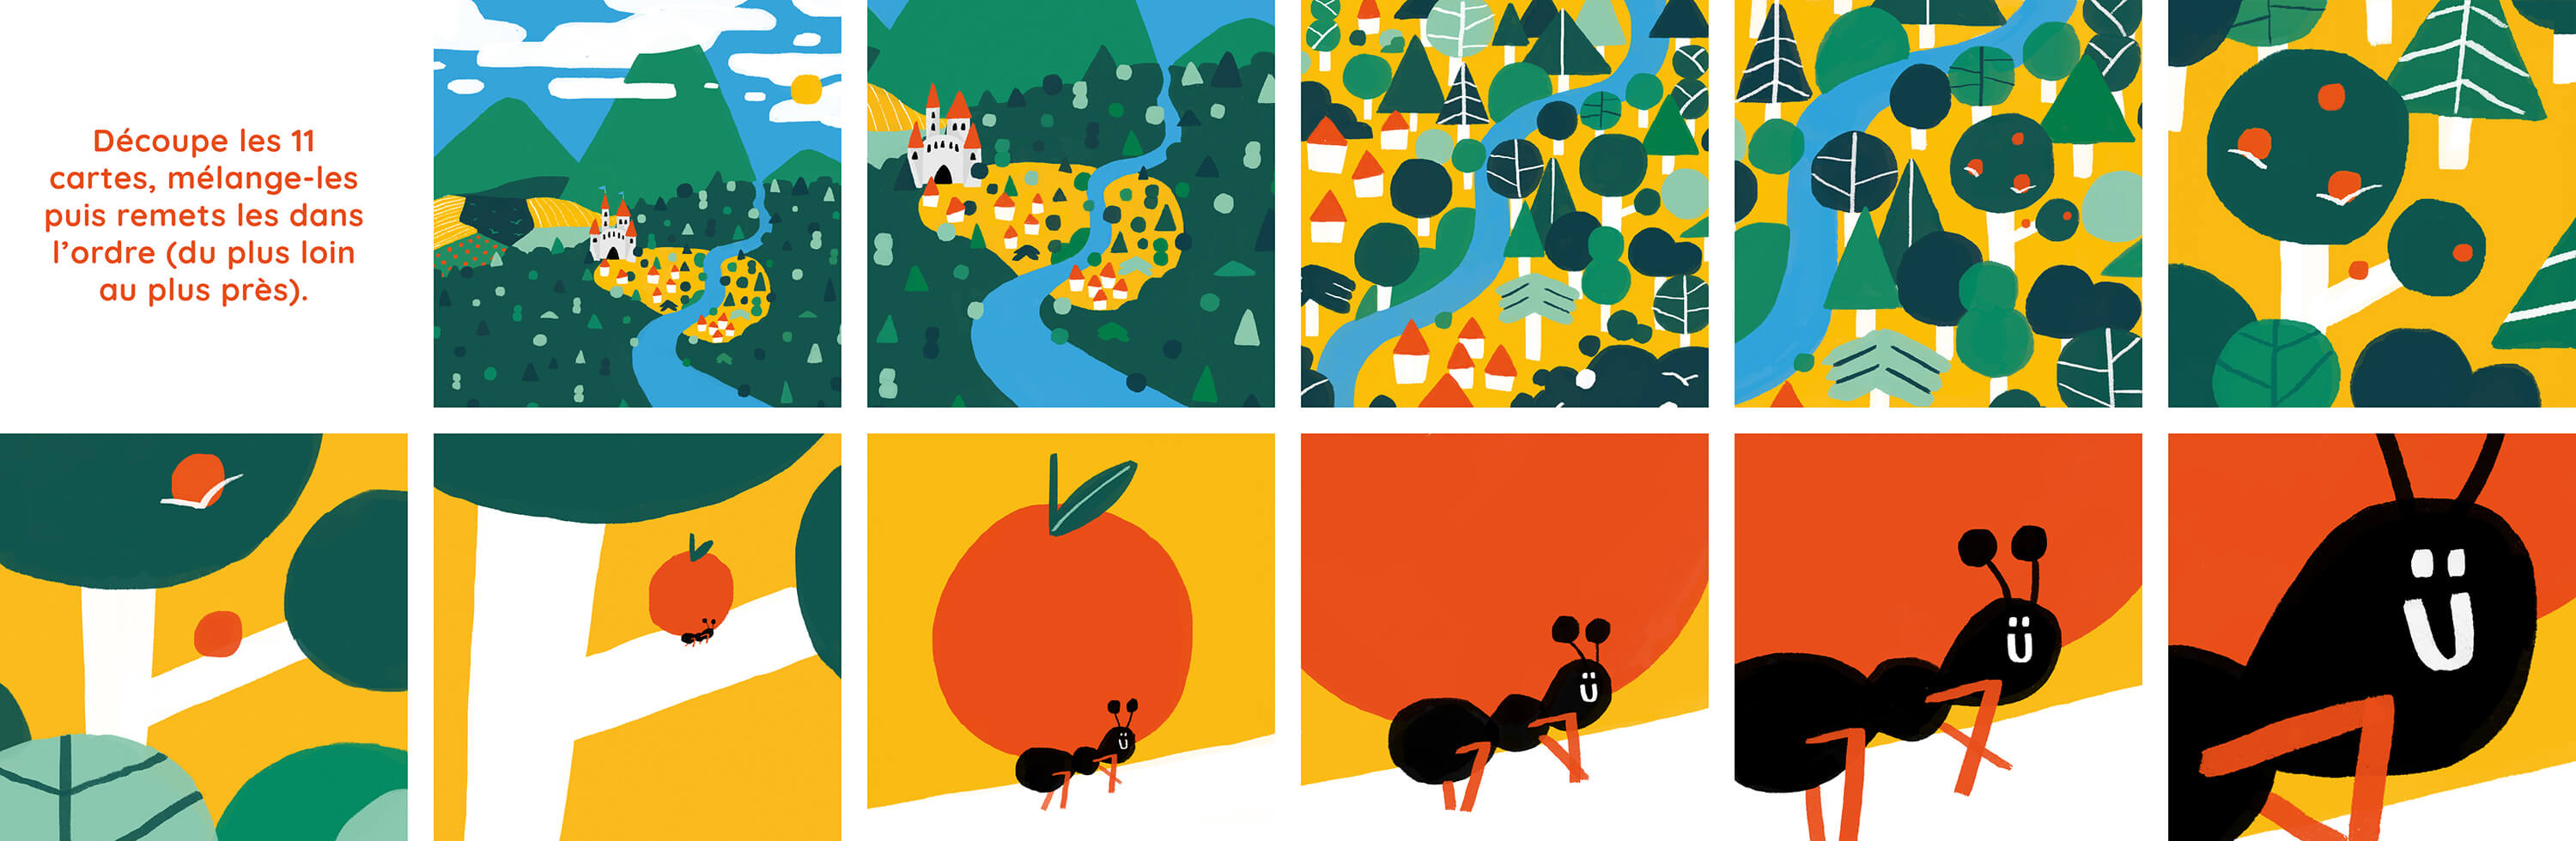 graou-children’s-game-forest-ant-castle-illustration-violeta-noy-3